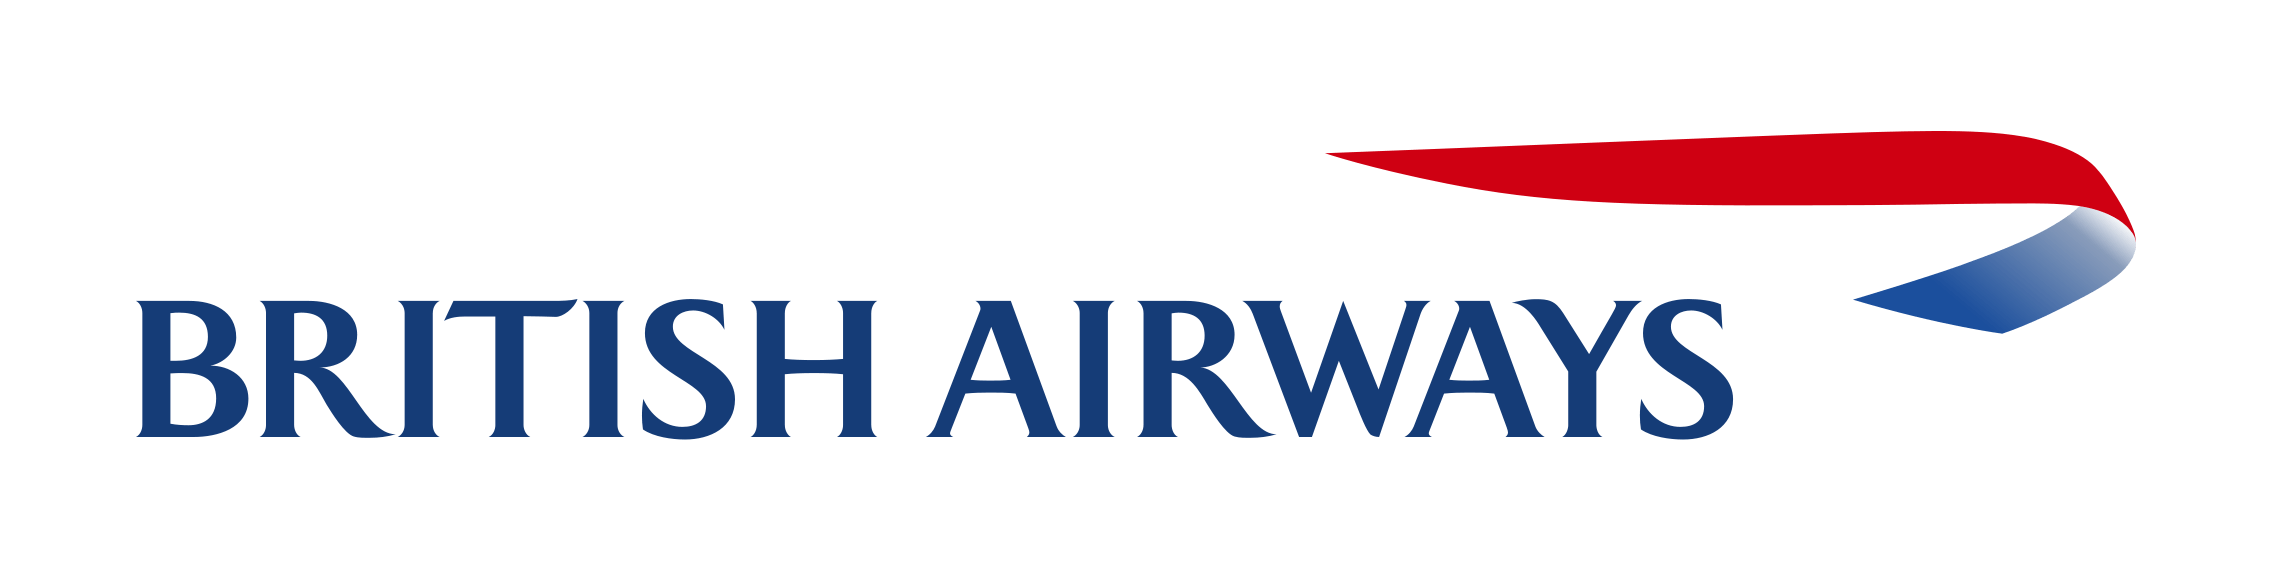 British Airline Logo - British Airways Logo, British Airways Symbol Meaning, History